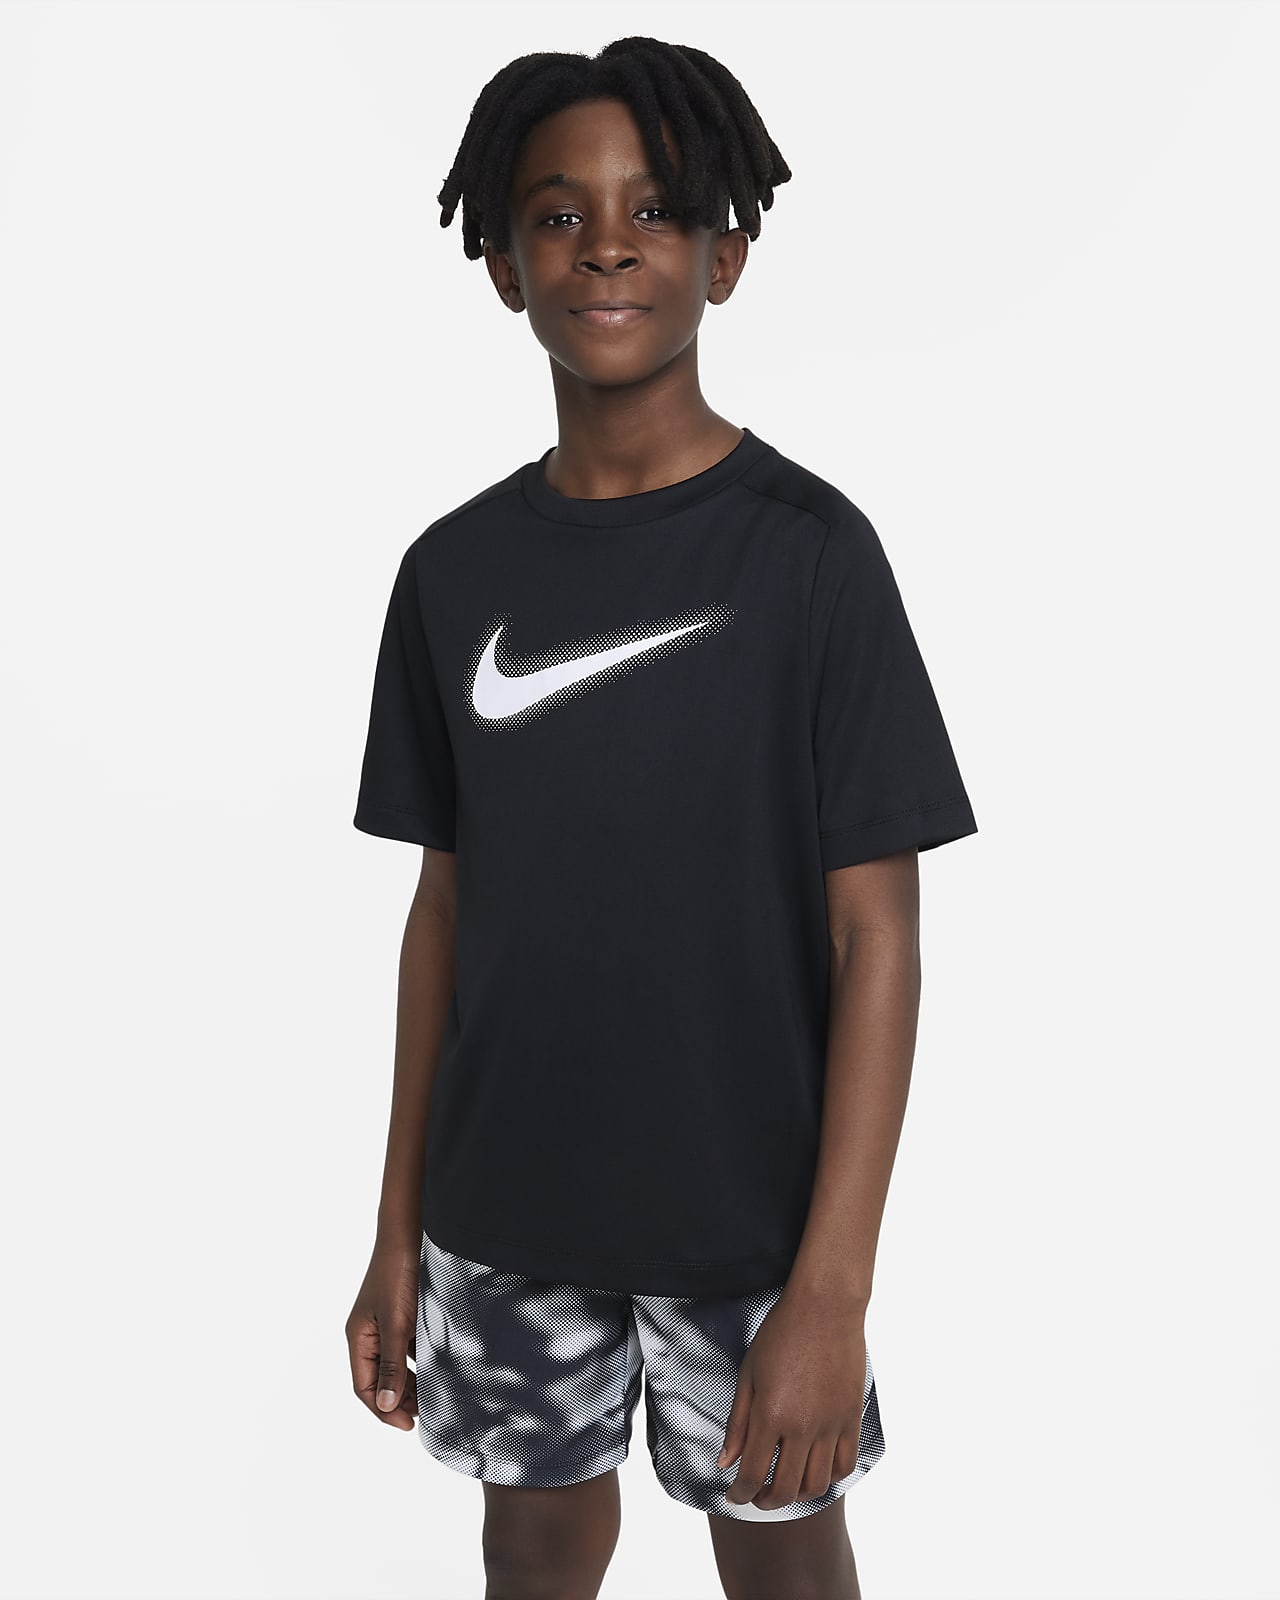 Nike Multi Dri-FIT trainingstop met graphic voor jongens